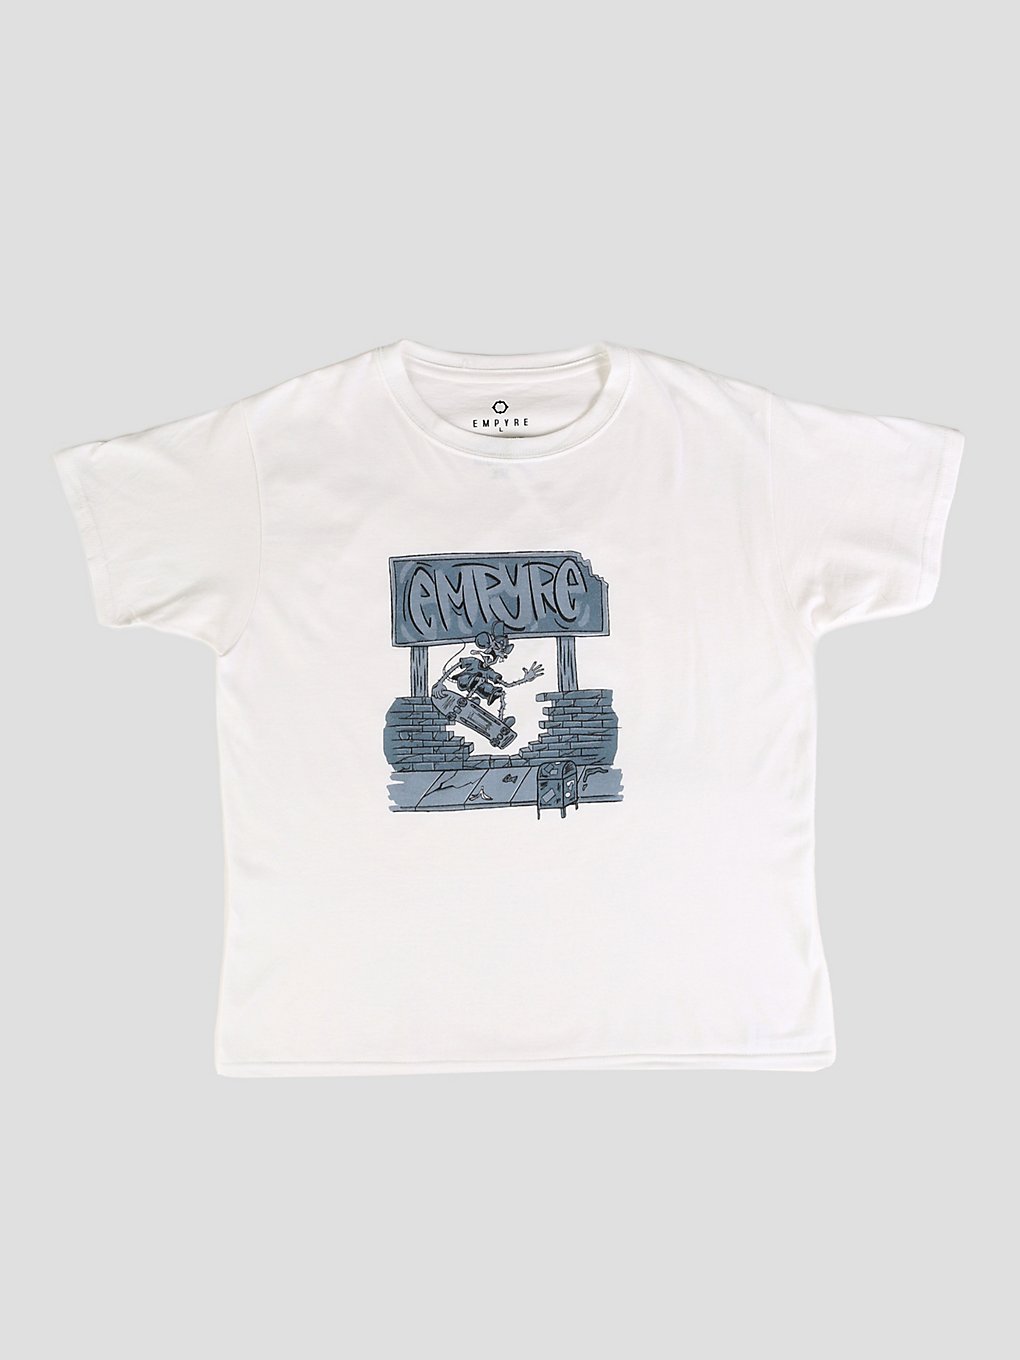 Empyre Fritz T-Shirt white kaufen